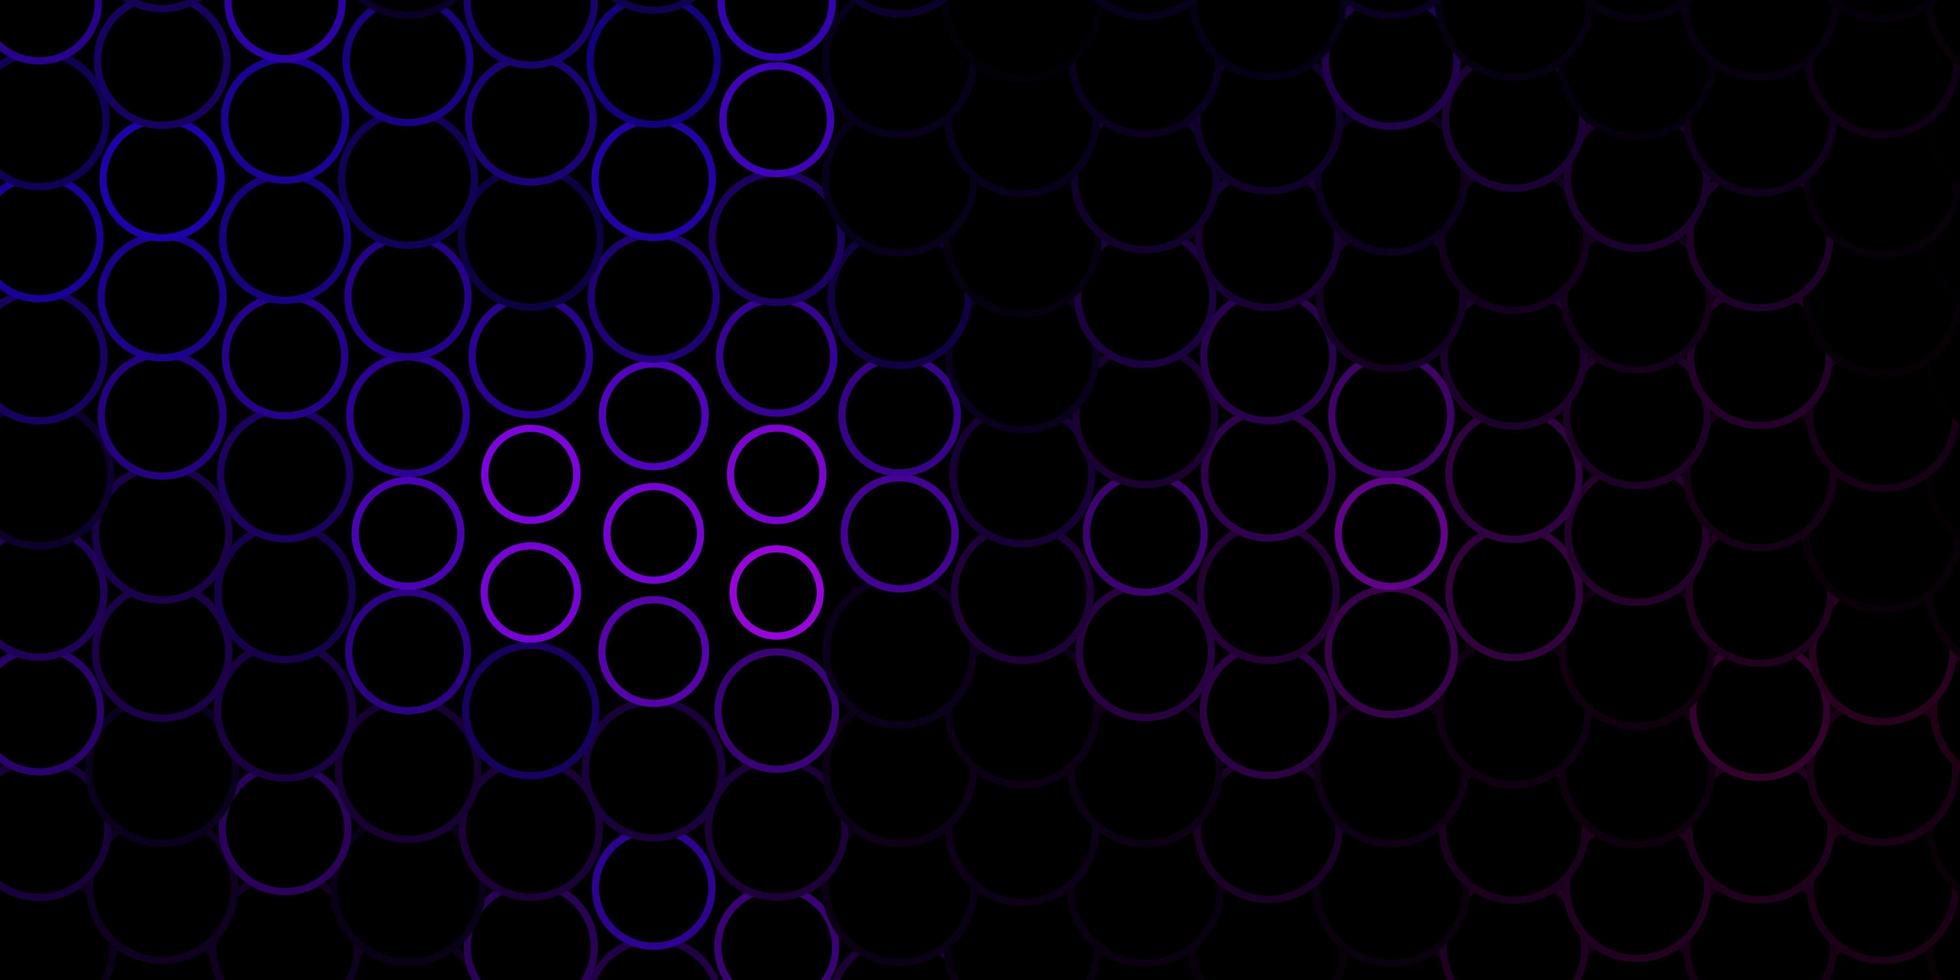 pano de fundo vector roxo escuro com círculos.